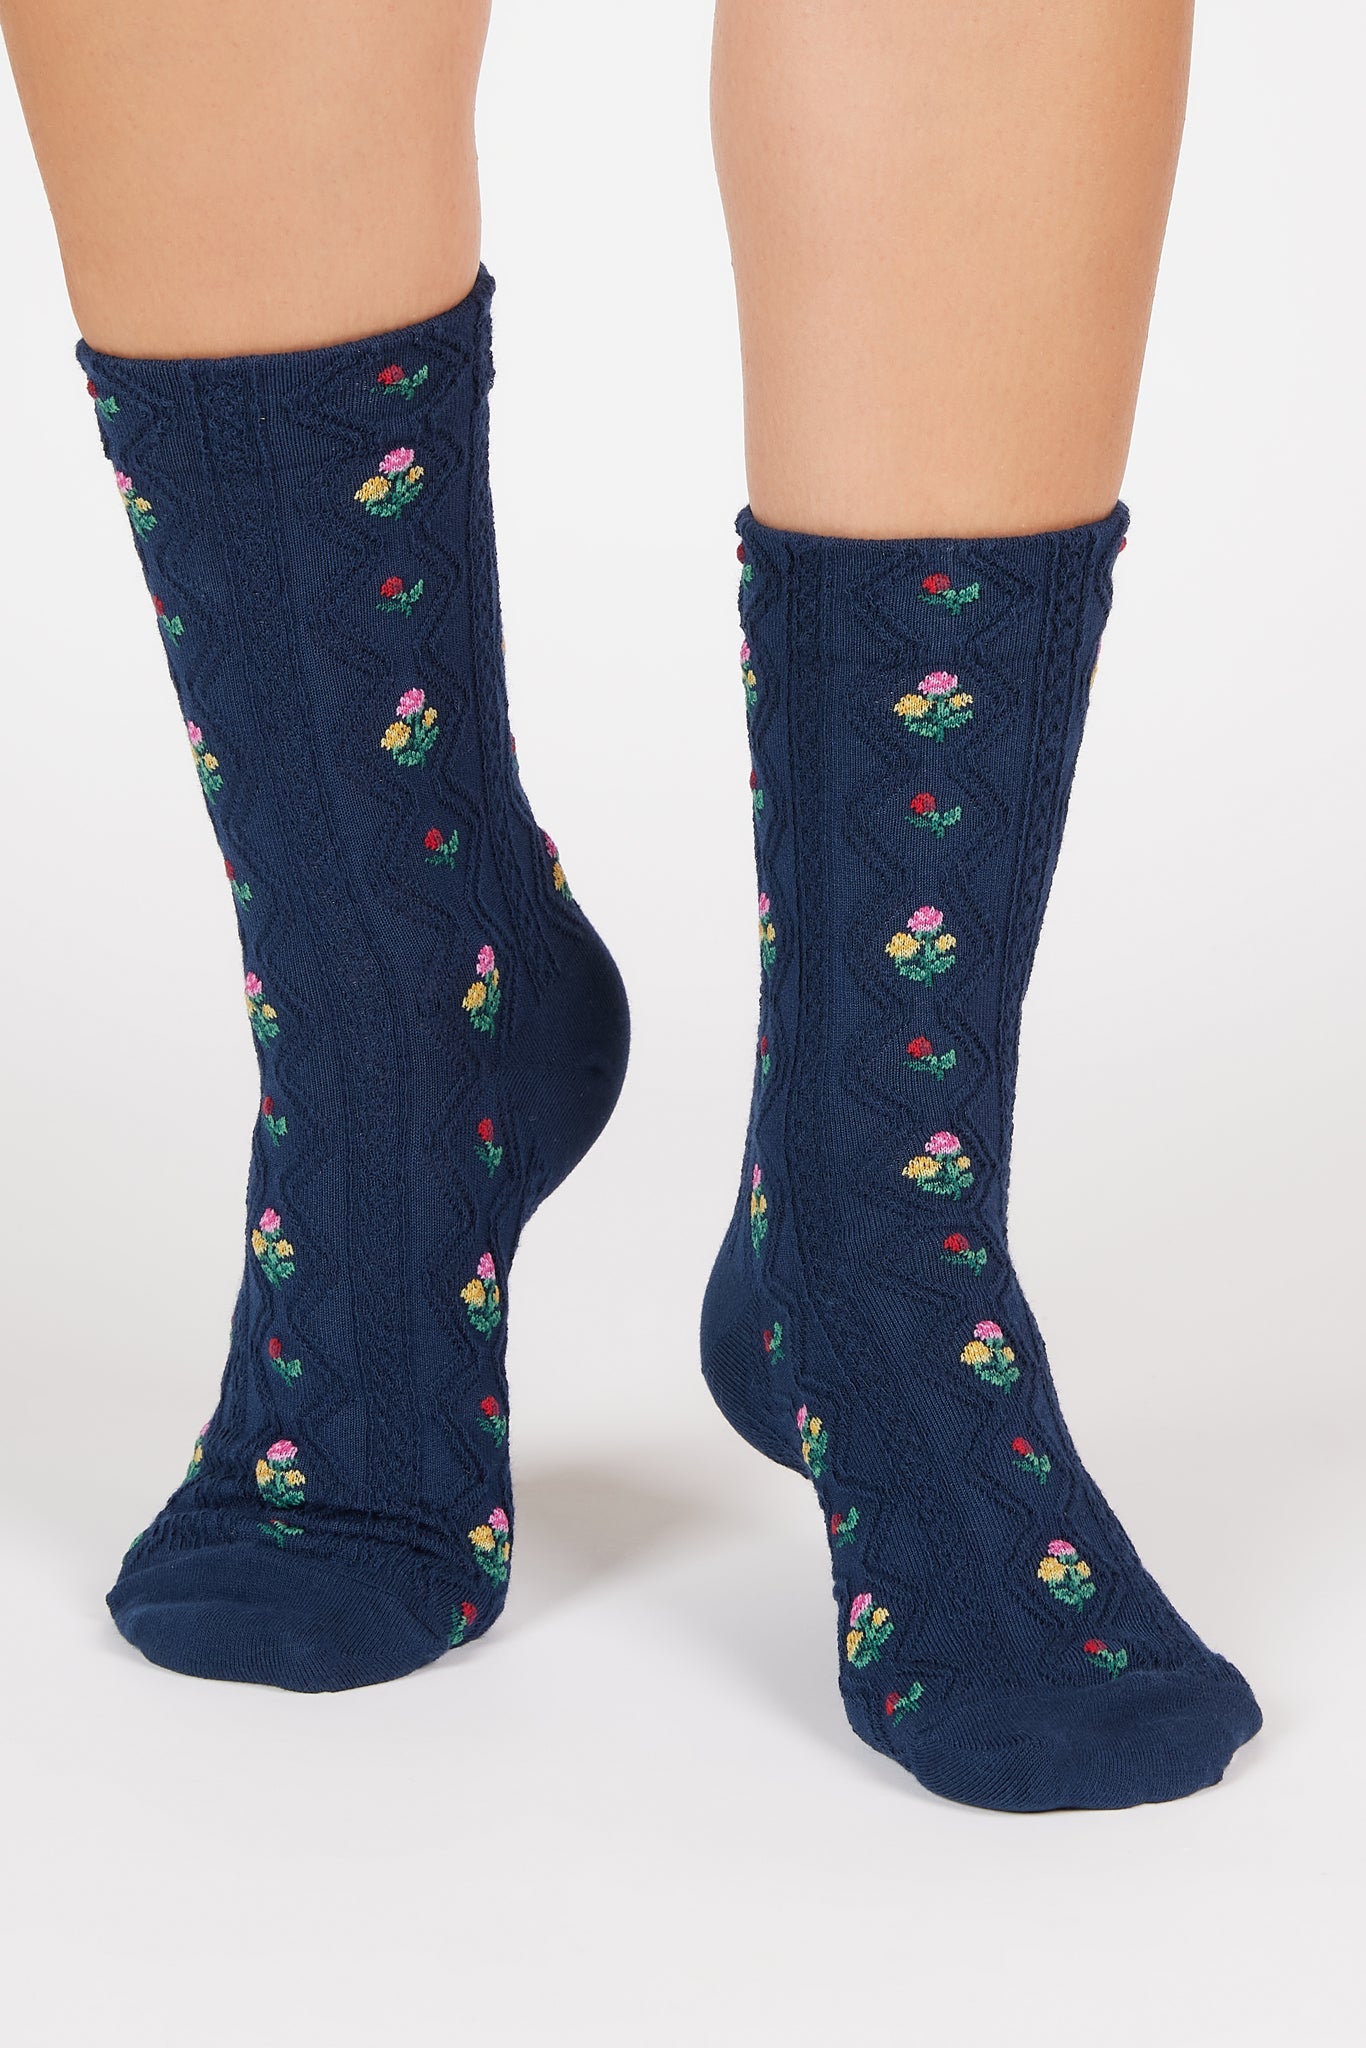 Navy blue floral garden socks